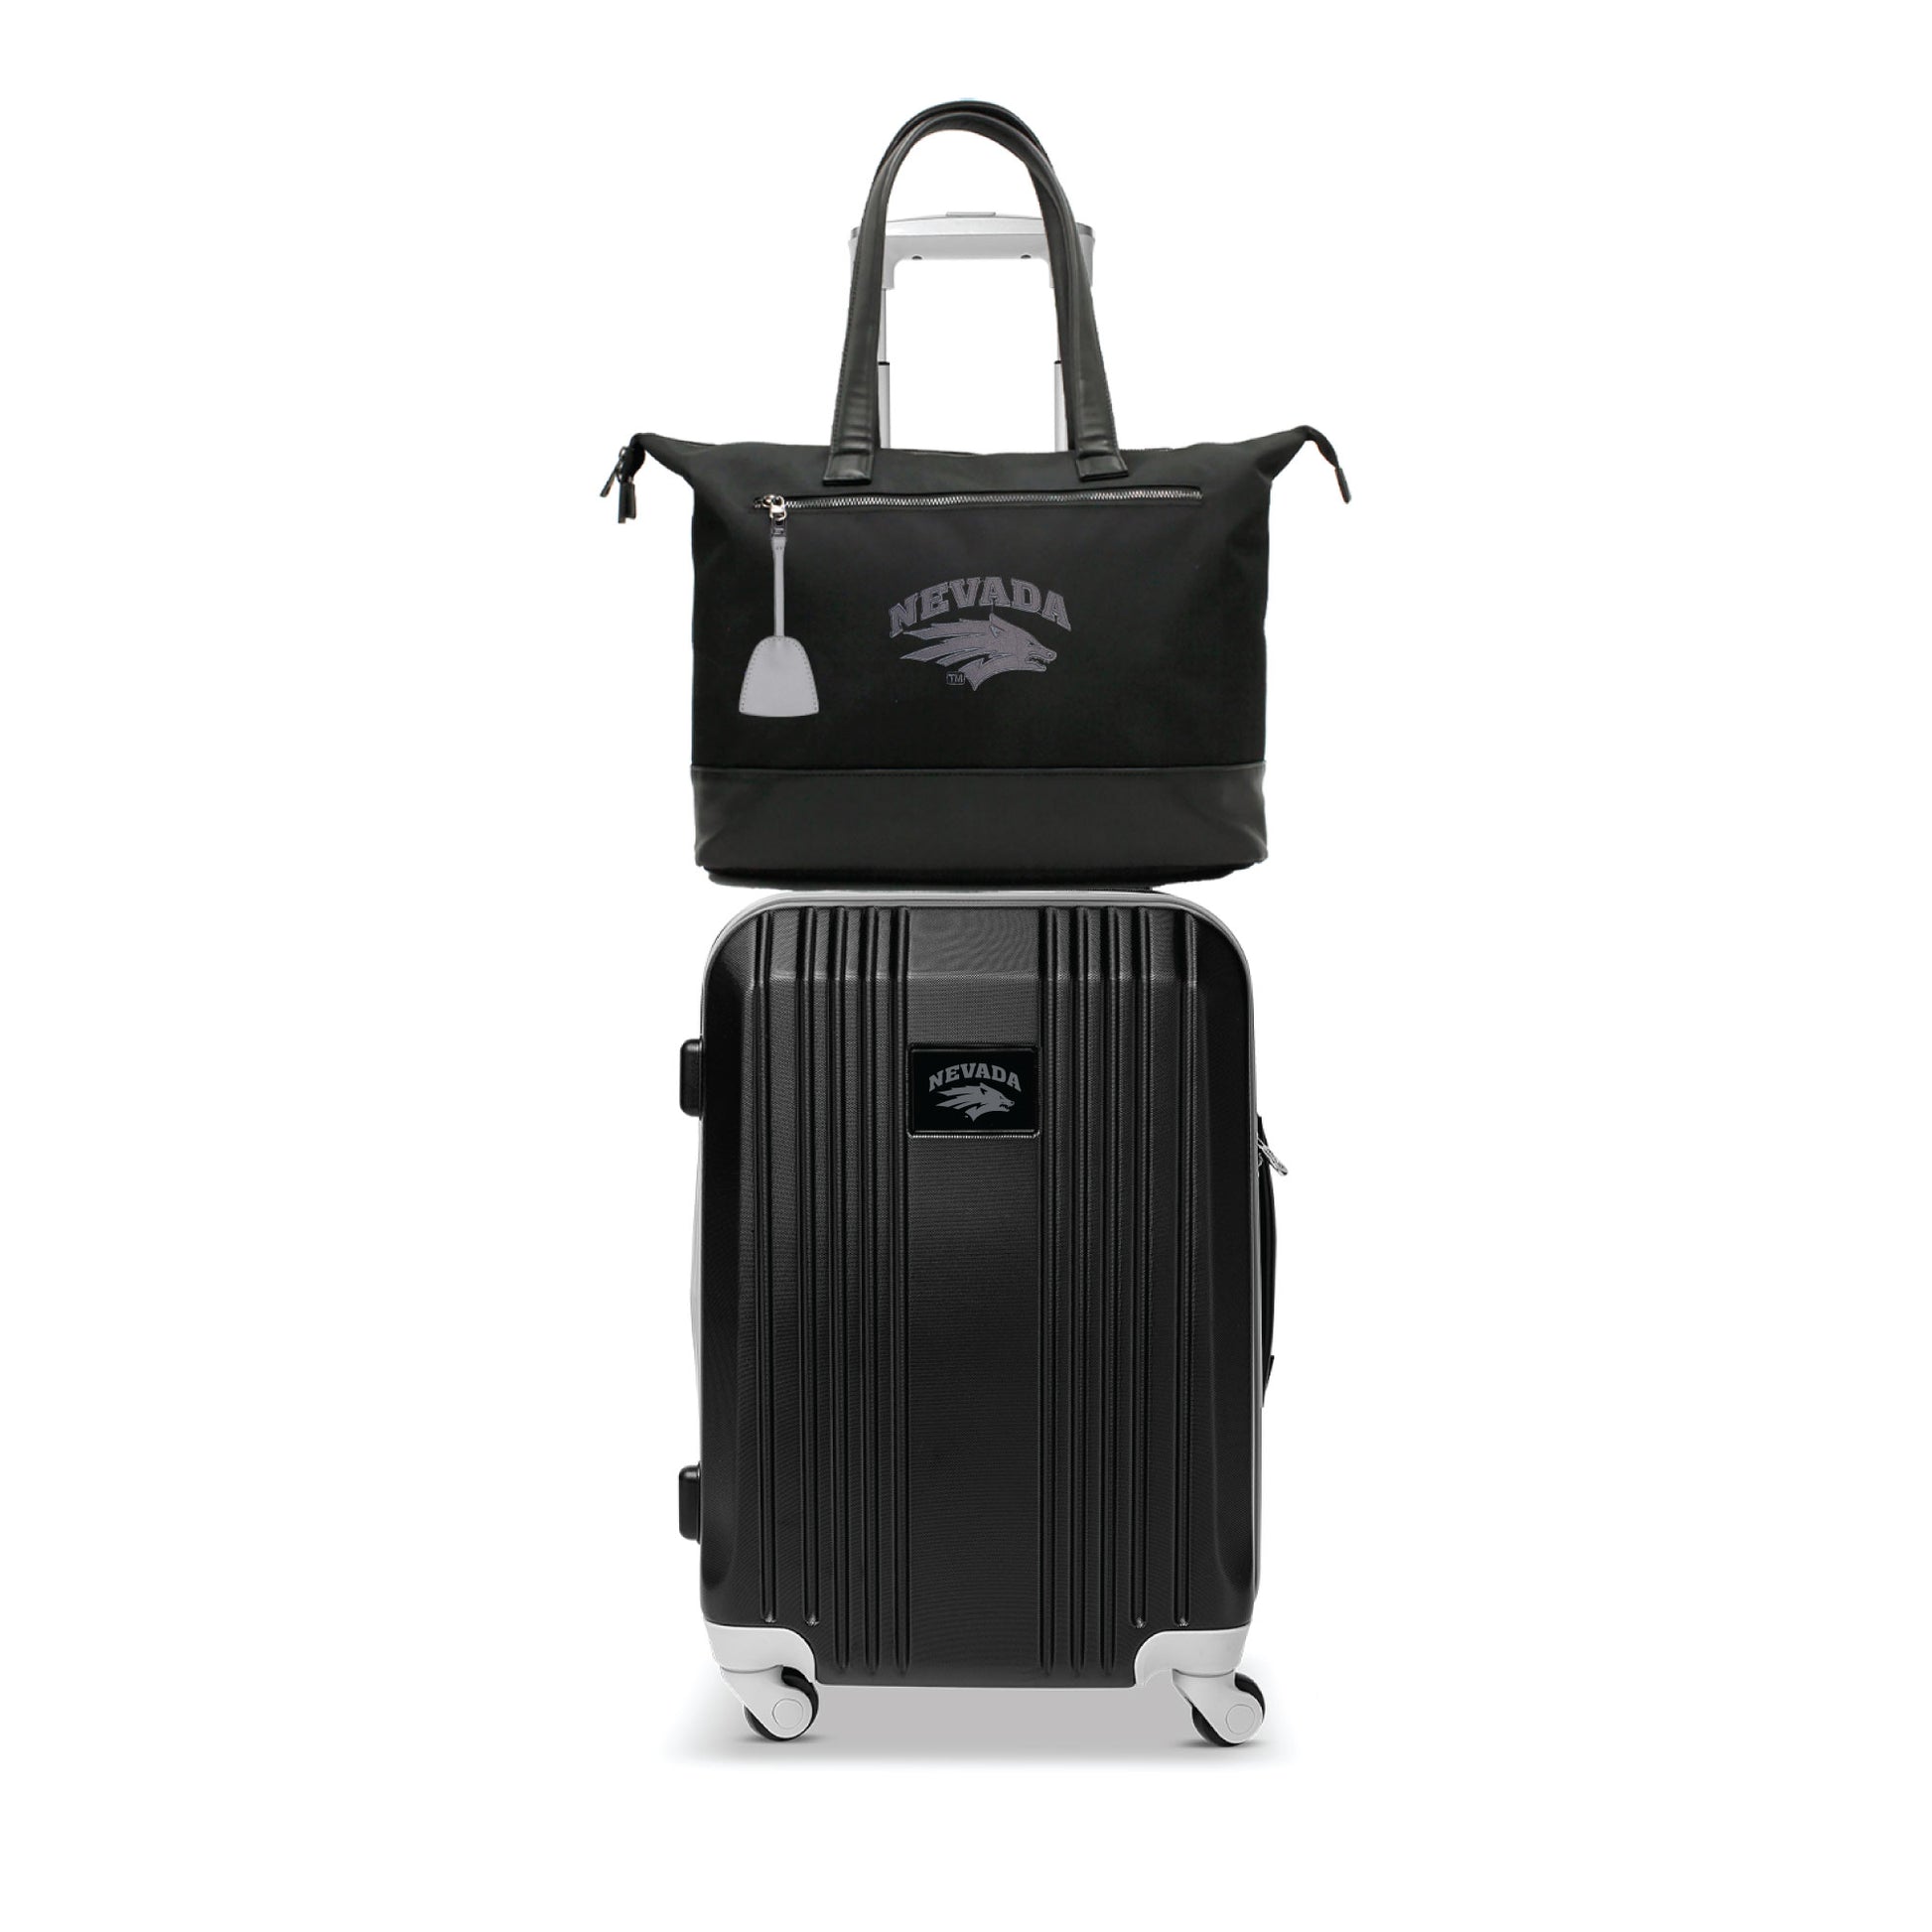 Nevada Reno Wolfpack Premium Laptop Tote Bag and Luggage Set